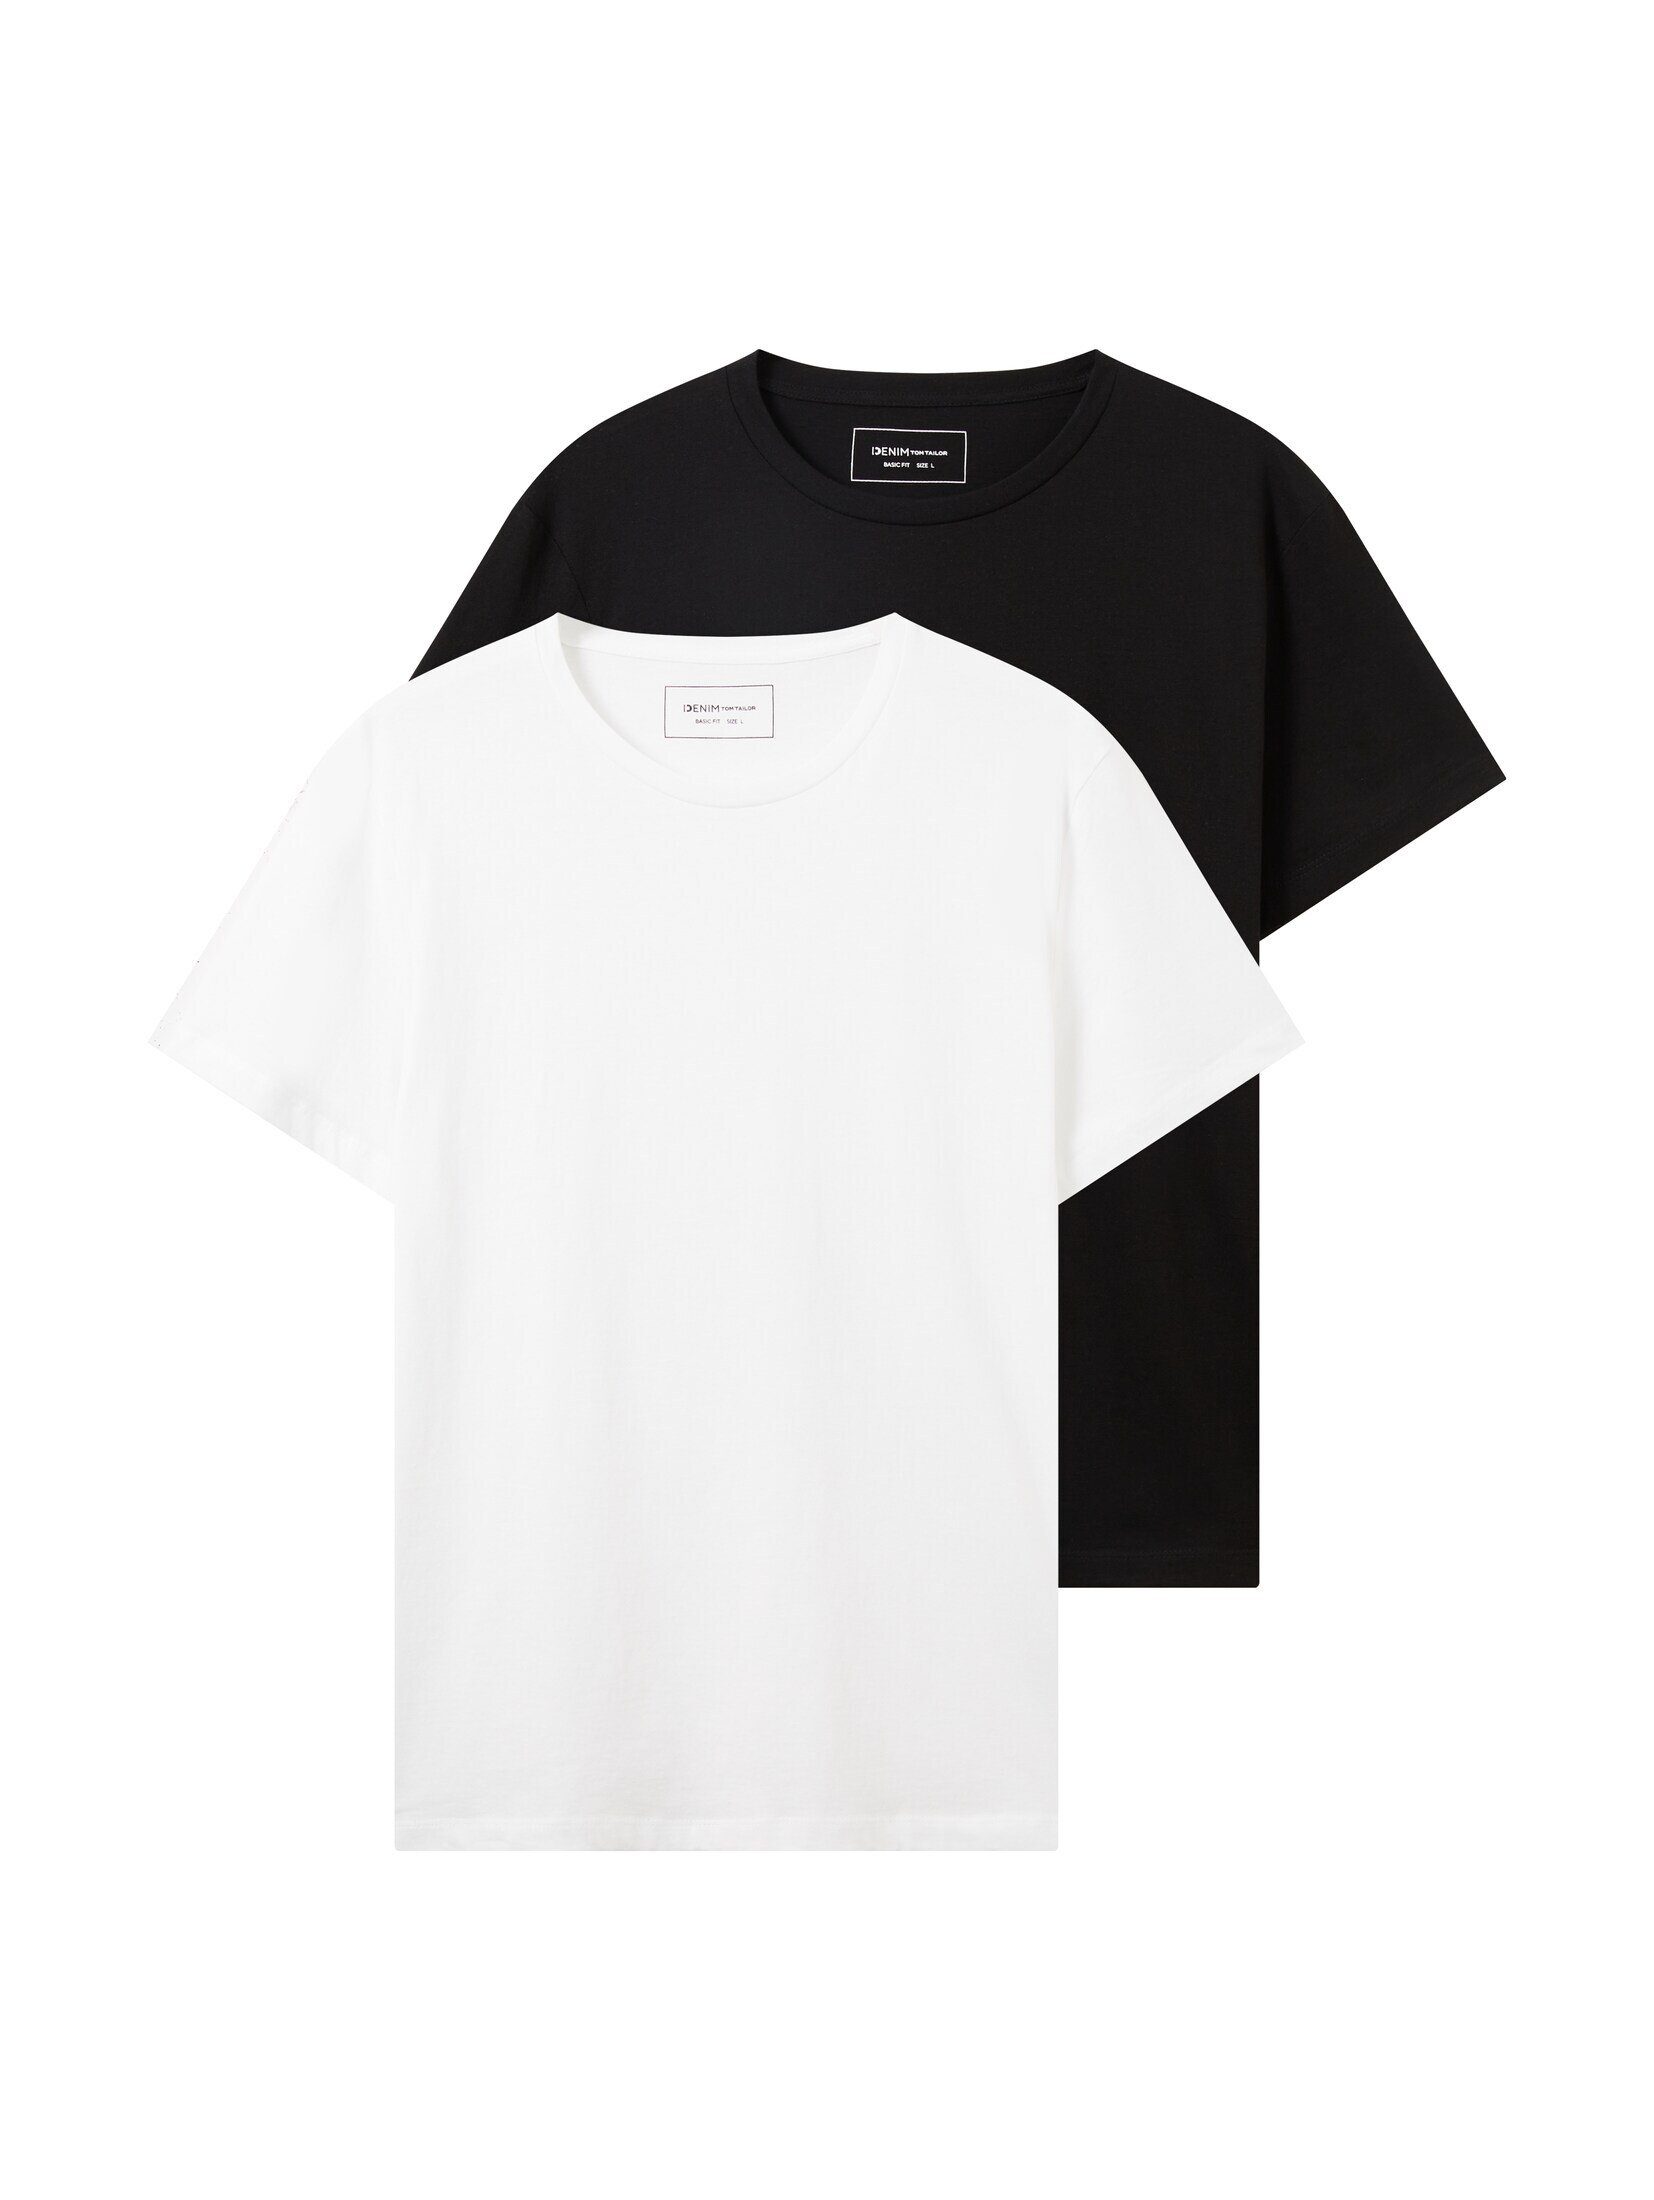 TOM TAILOR Denim Doppelpack T-Shirts White T-Shirt im